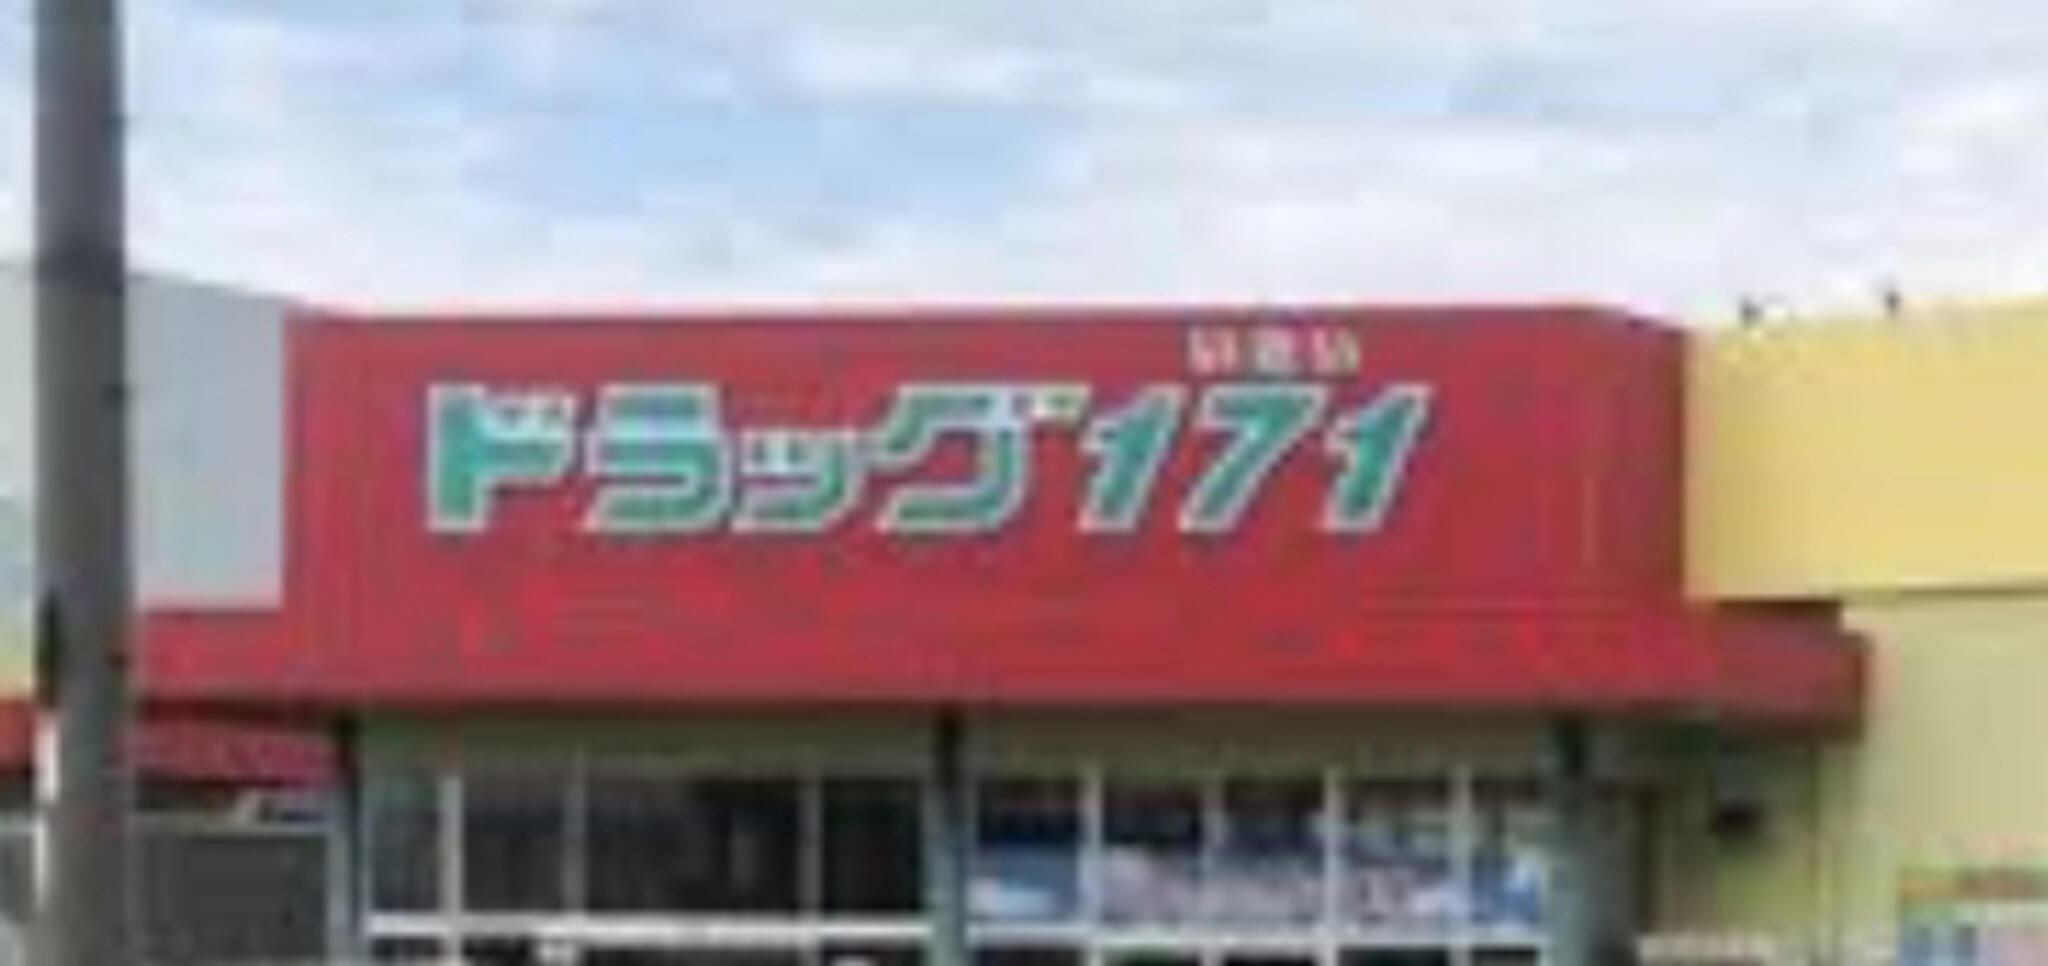 業務スーパー 鳥取駅南店の代表写真9